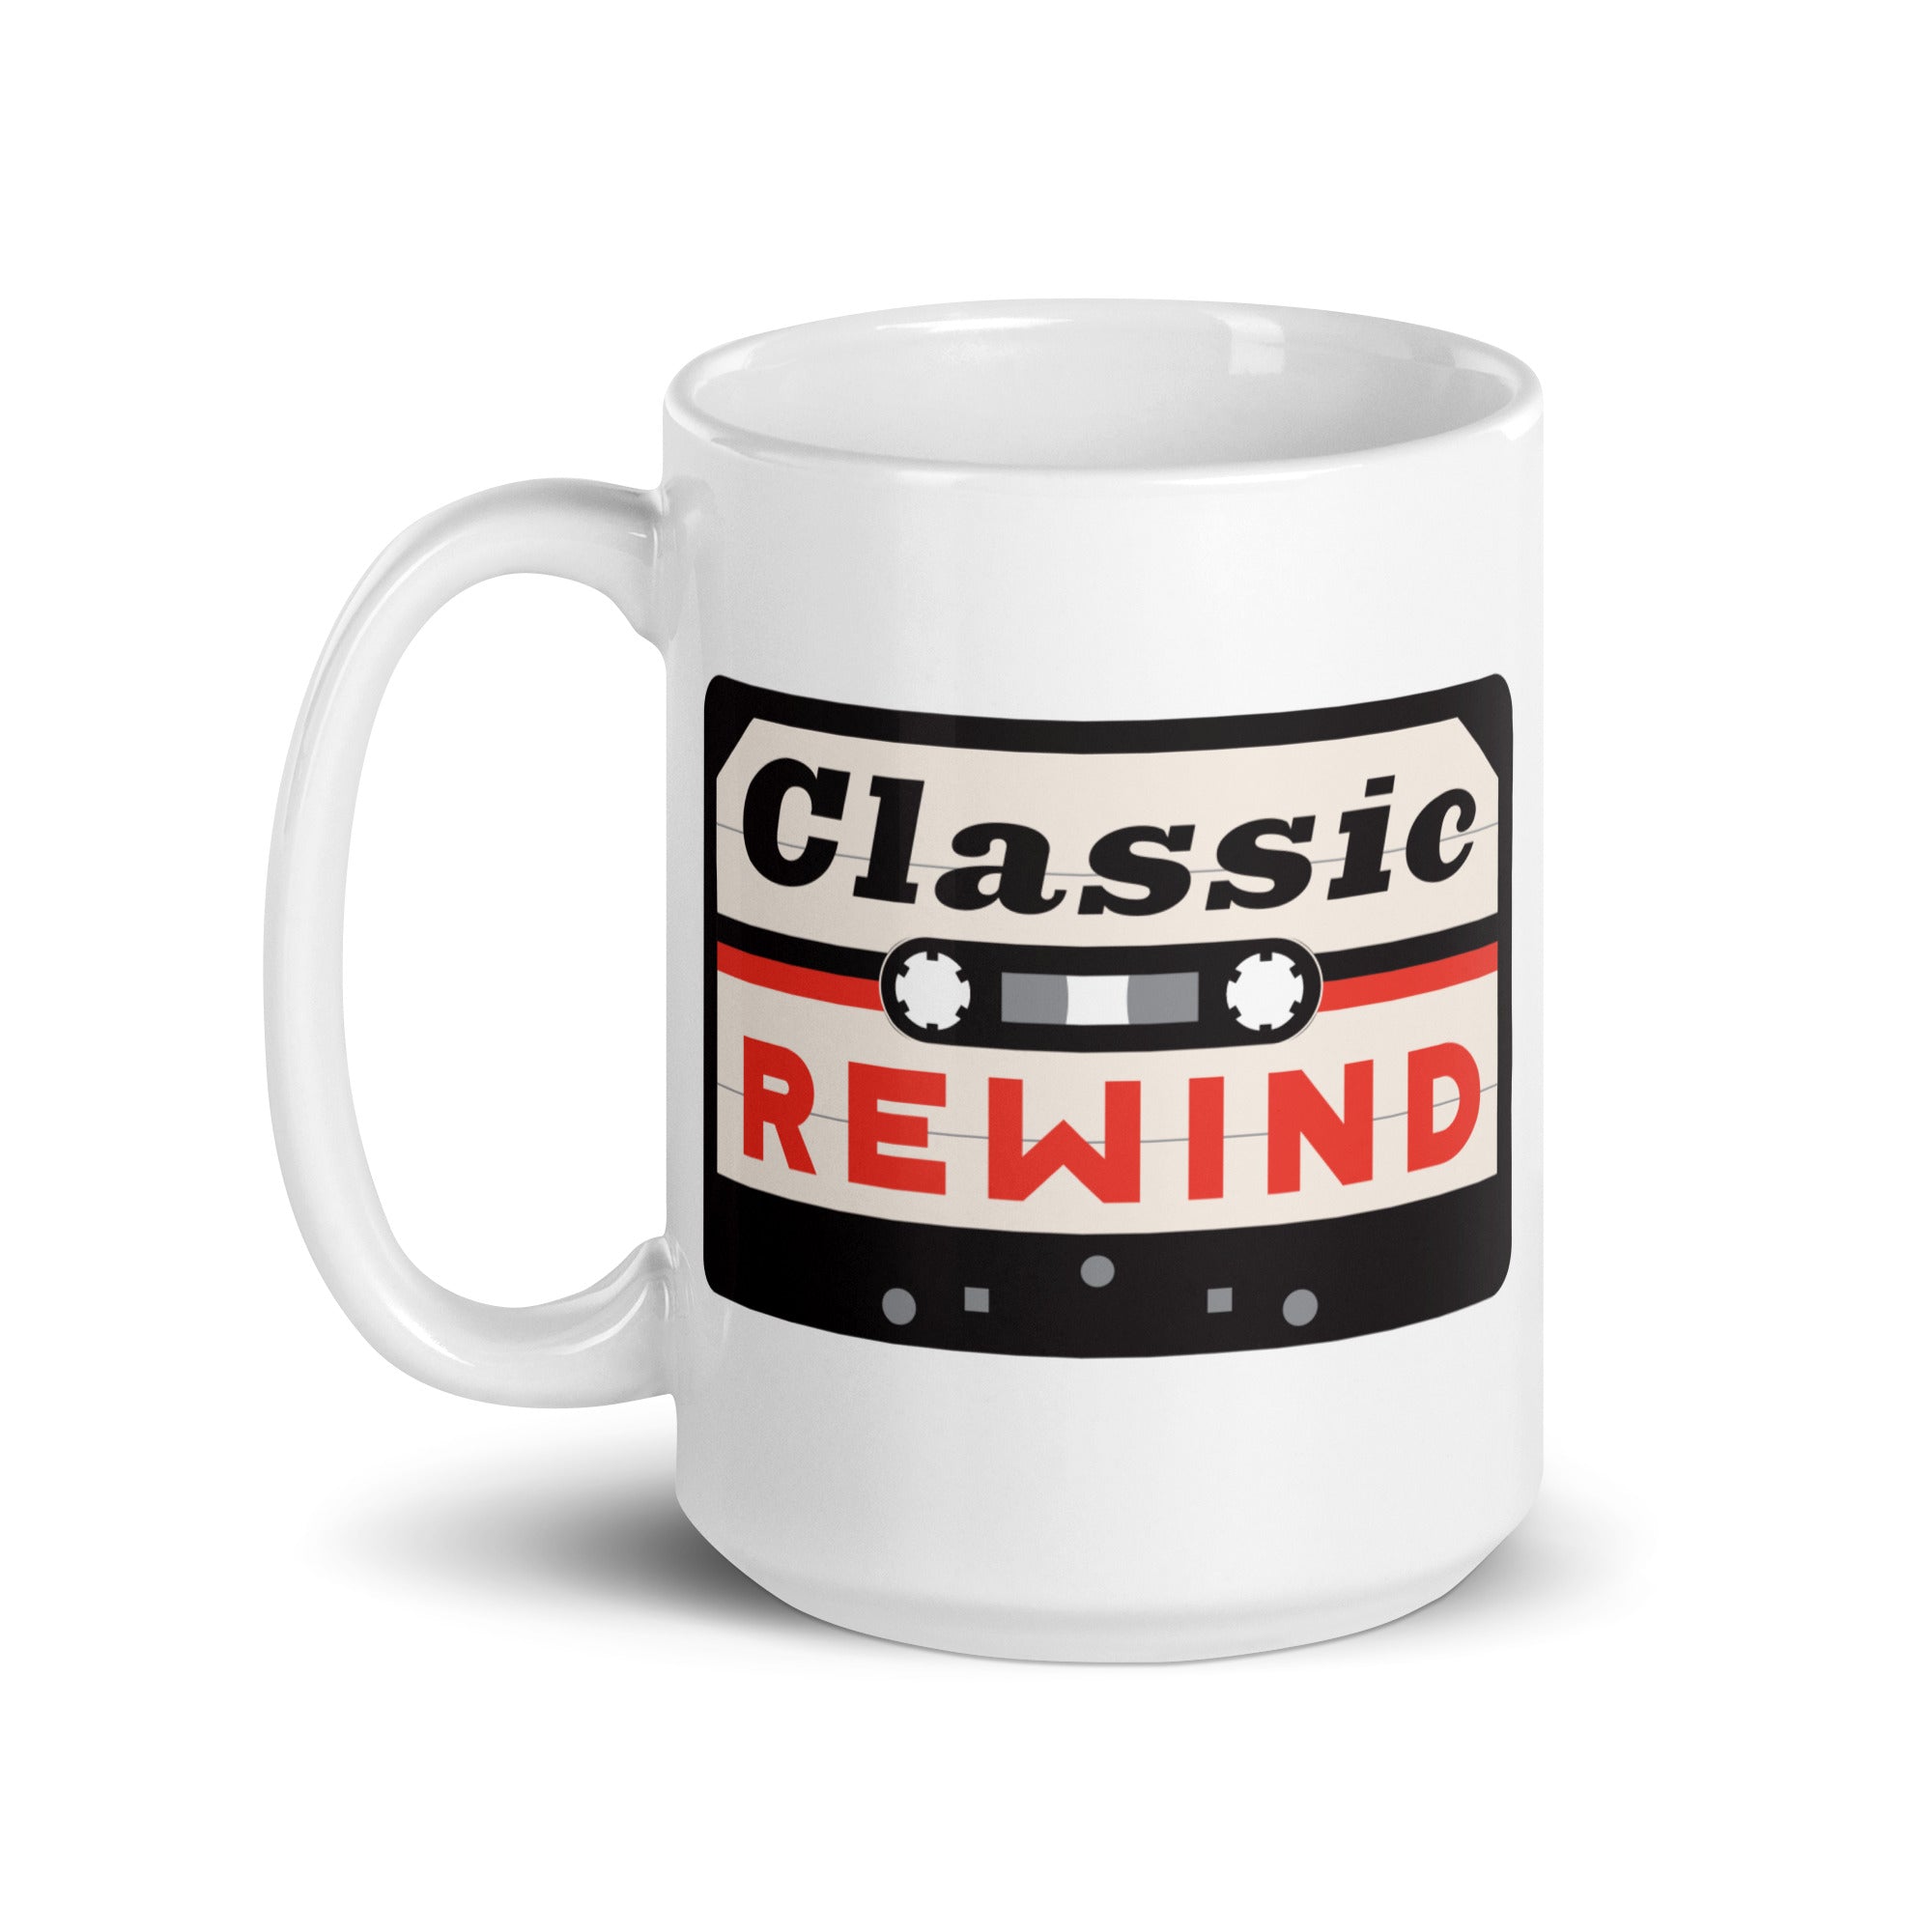 Classic Rewind: Mug